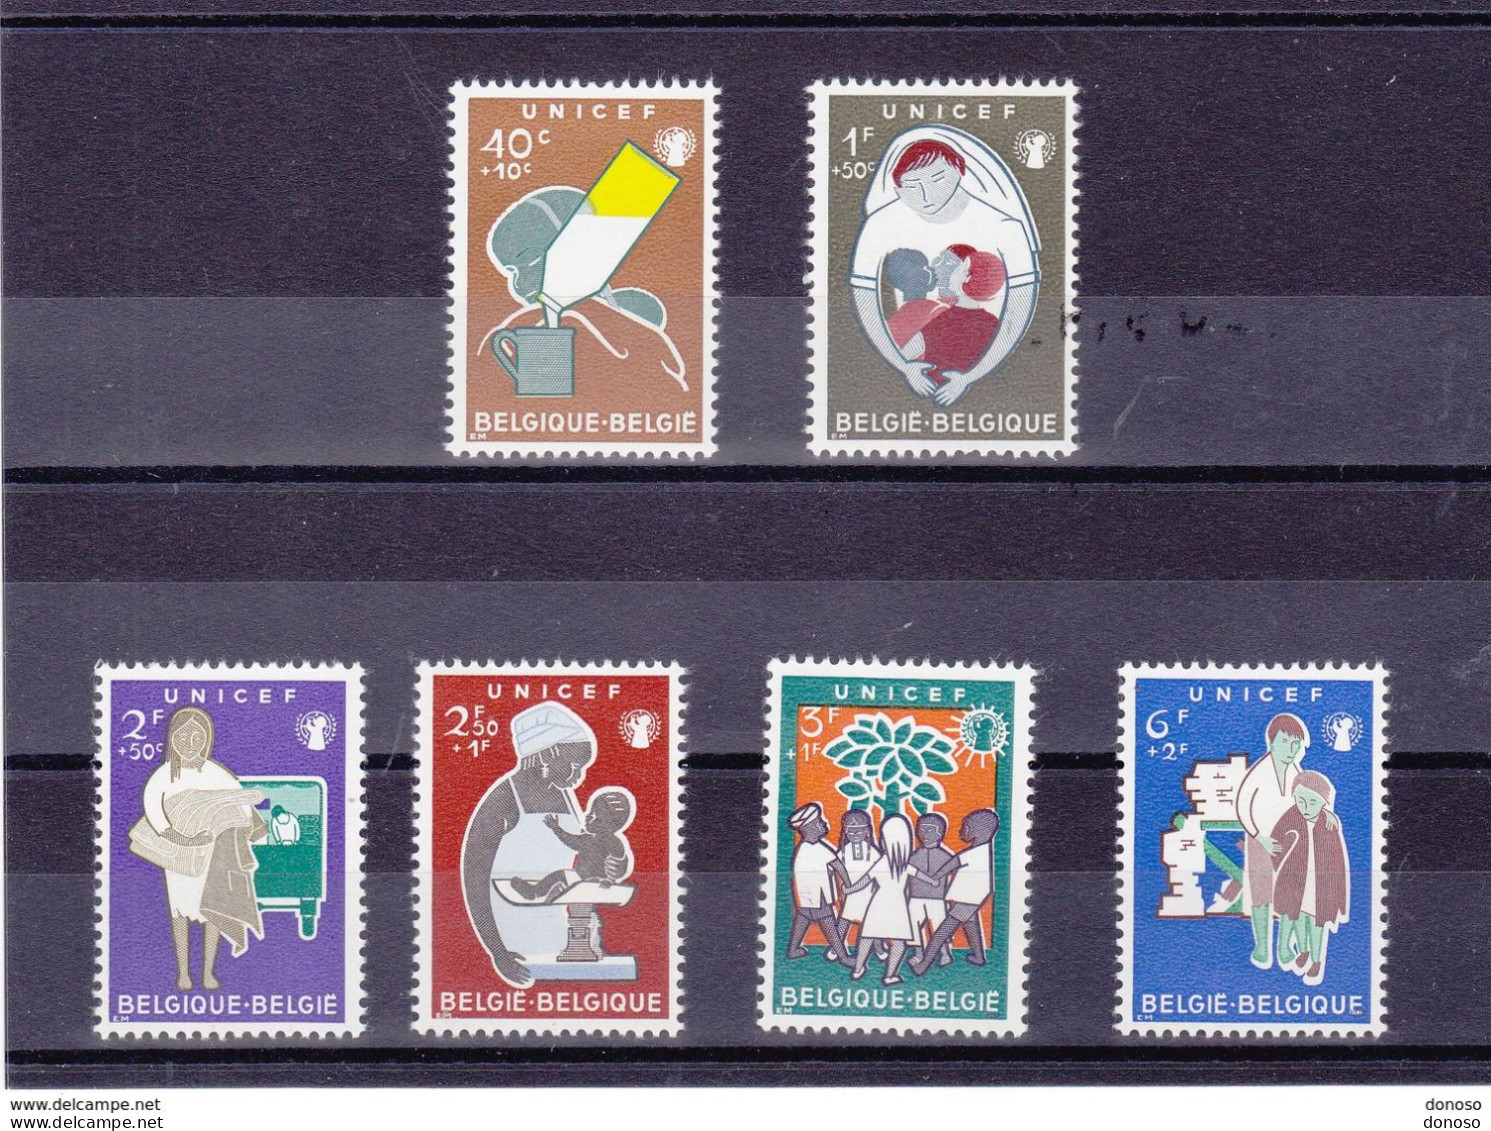 BELGIQUE 1960 UNICEF à 10% Yvert 1153-1158, Michel 1212-1217 NEUF** MNH Cote Yv 14,30 Euros - Unused Stamps